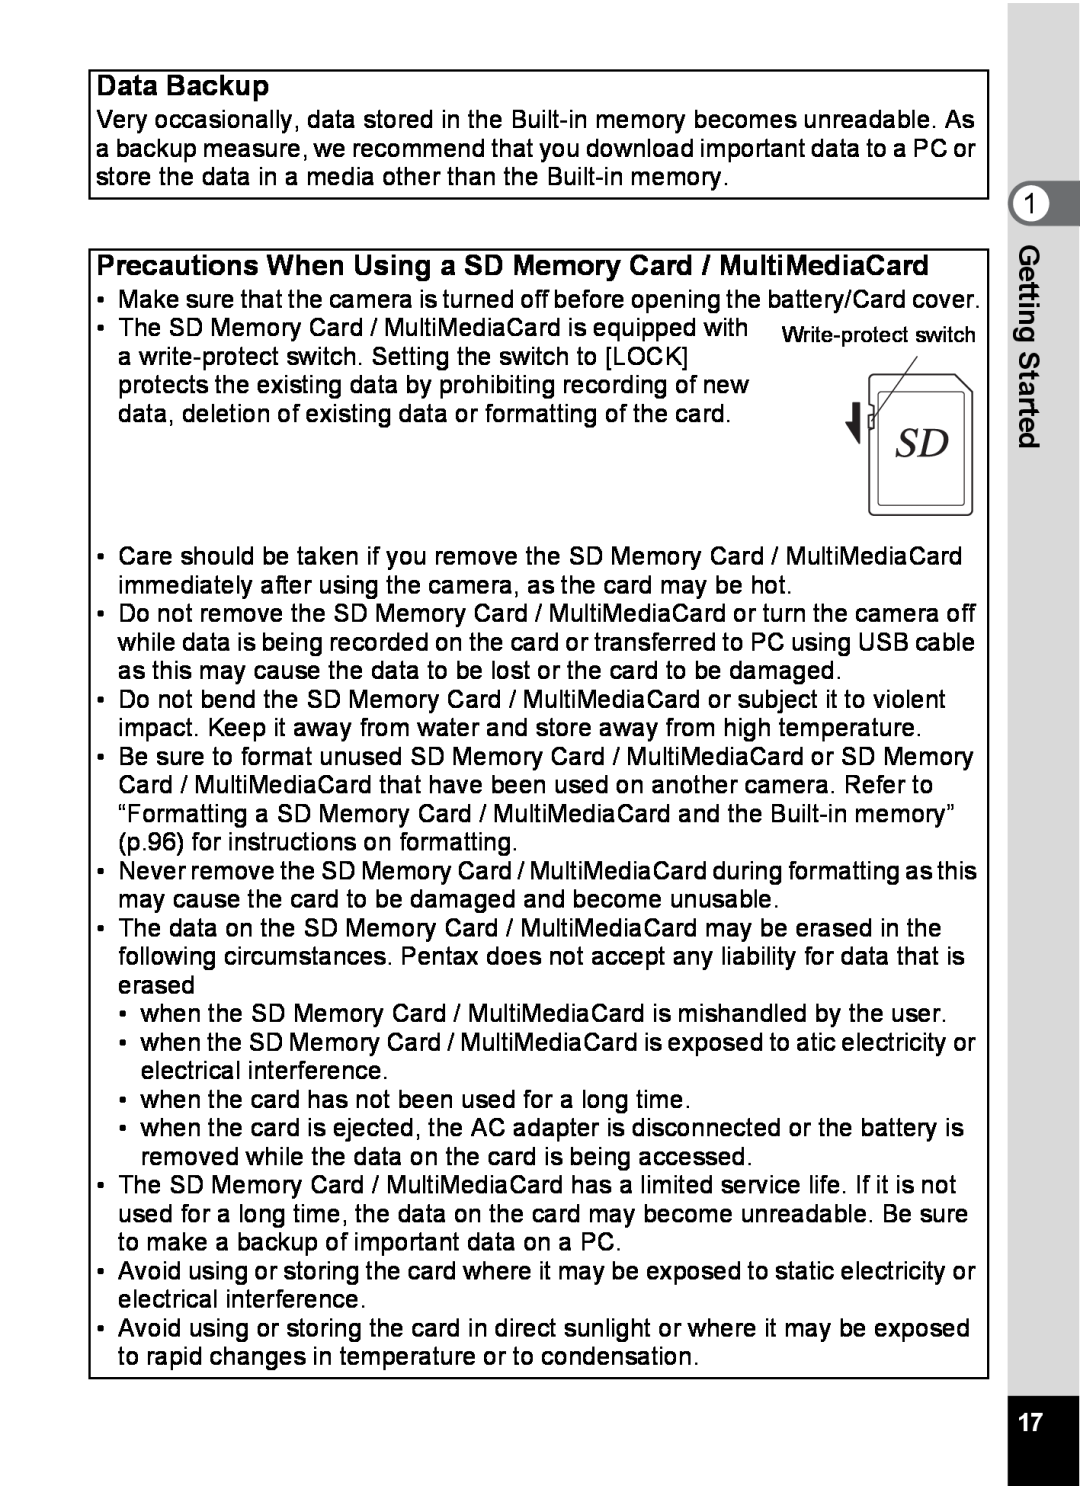 Pentax S4 manual Data Backup, Precautions When Using a SD Memory Card / MultiMediaCard 